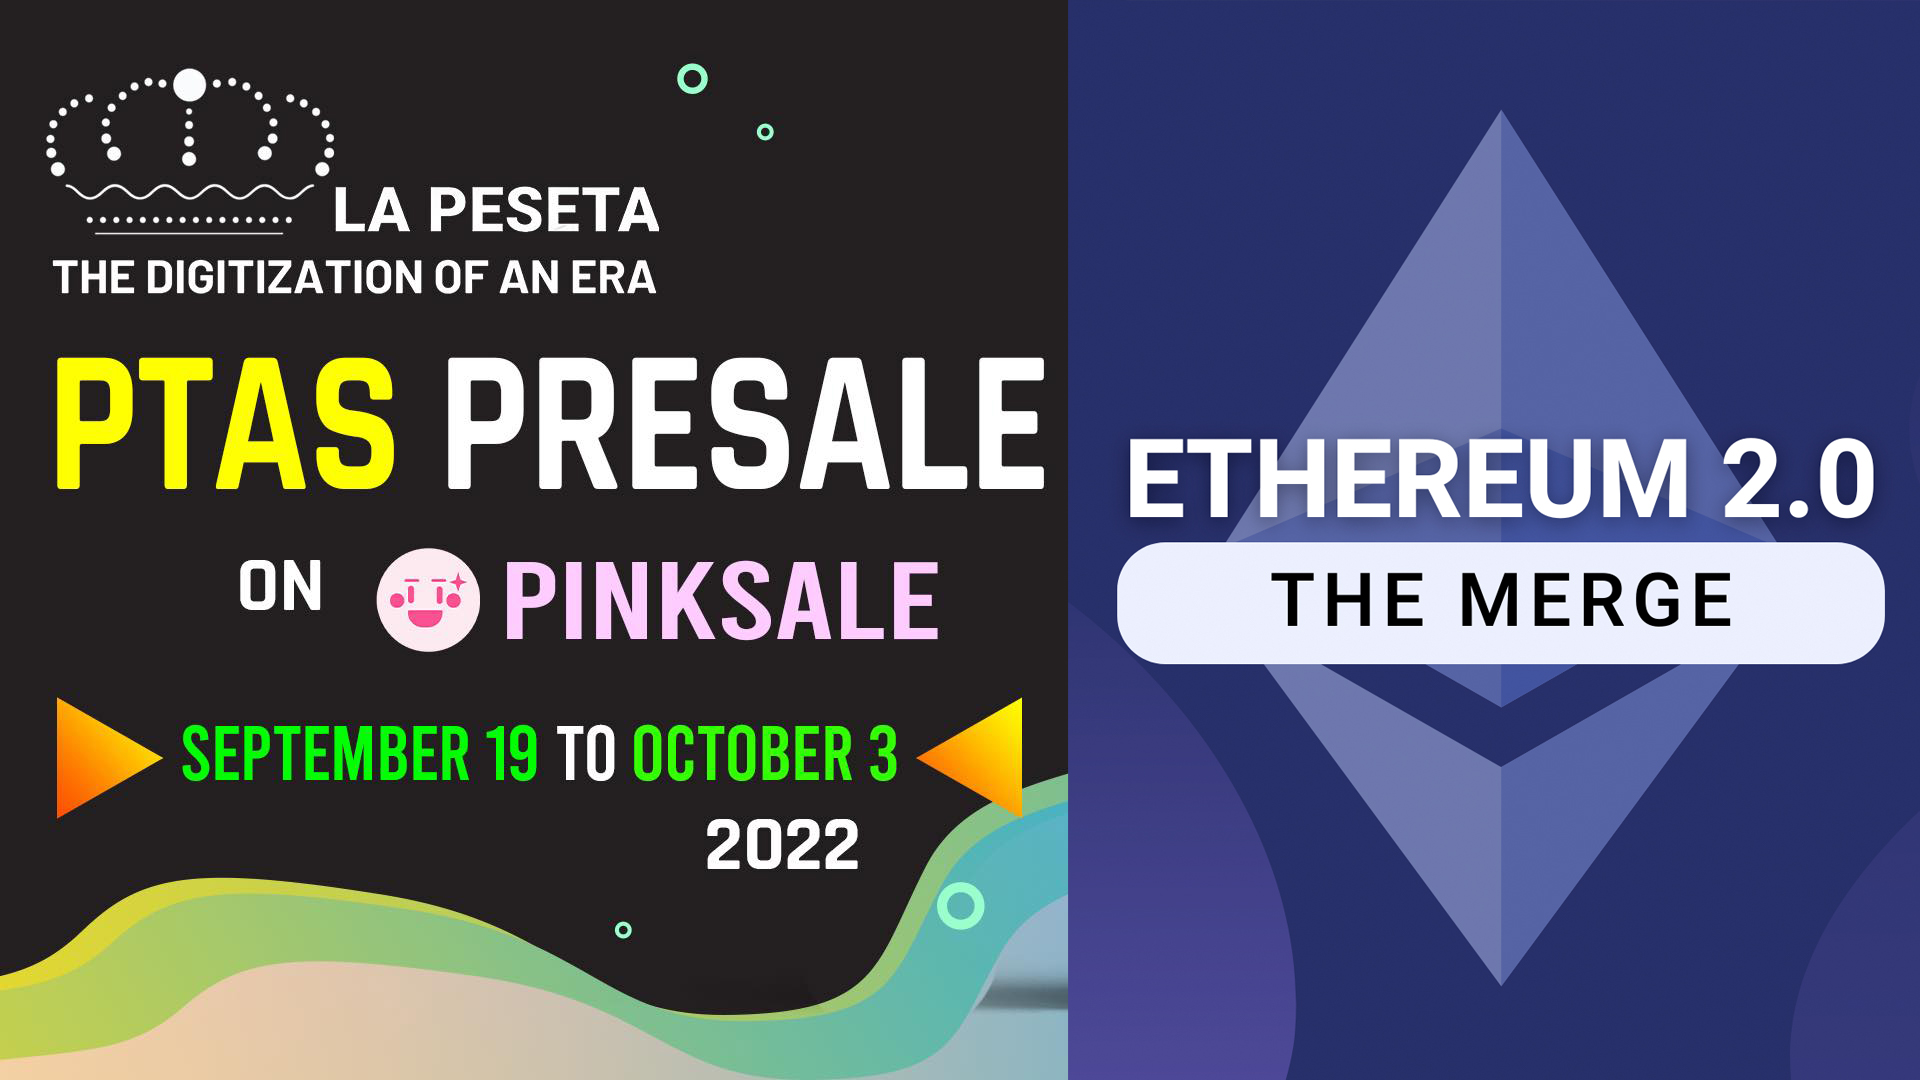 The Spanish “Pesetas” (PTAS) token arrives at Ethereum